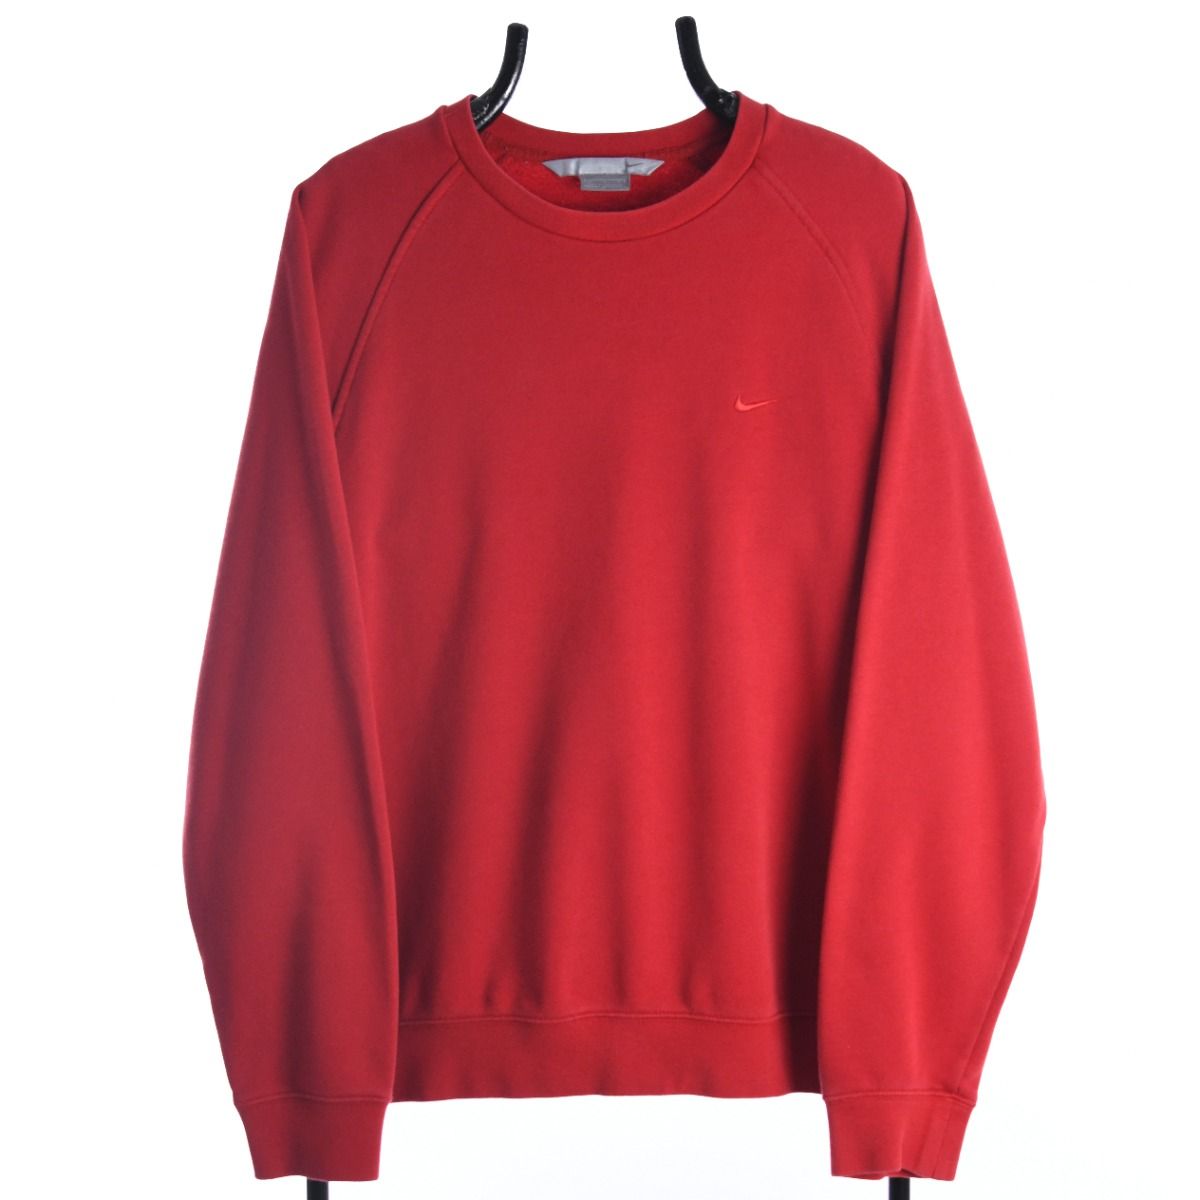 Nike Early 2000s Red Sweatshirt With Breast Swoosh logo